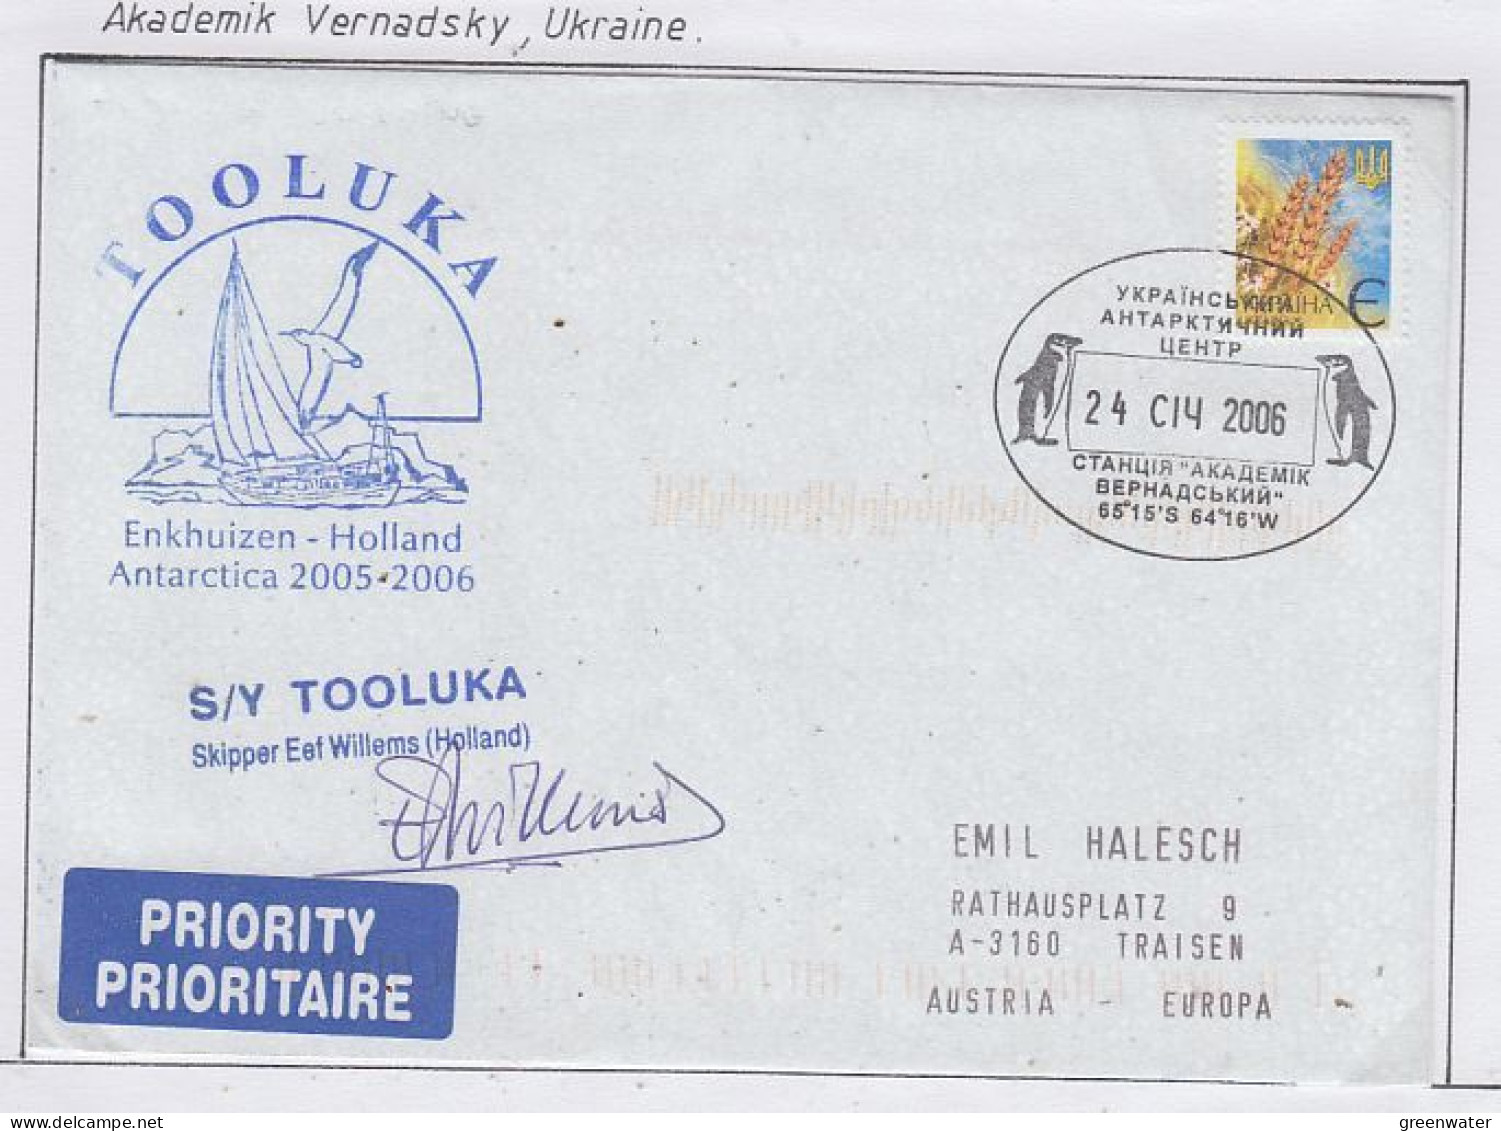 Ukraine Ship Visit SY Tooluka To Base Akademik Vernadsky Signature  2006 (59890) - Polar Ships & Icebreakers